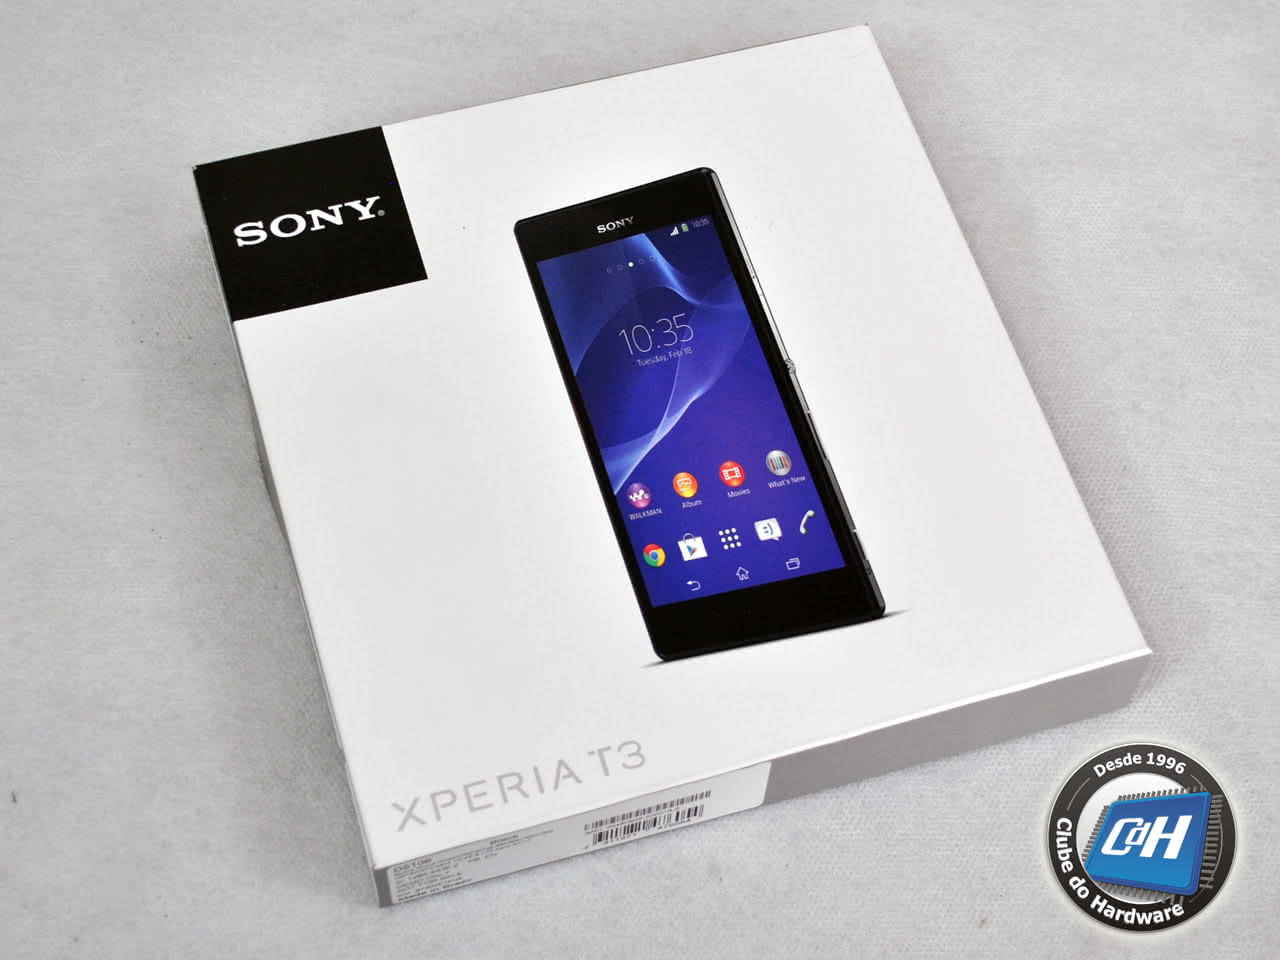 Teste do smartphone Sony Xperia T3